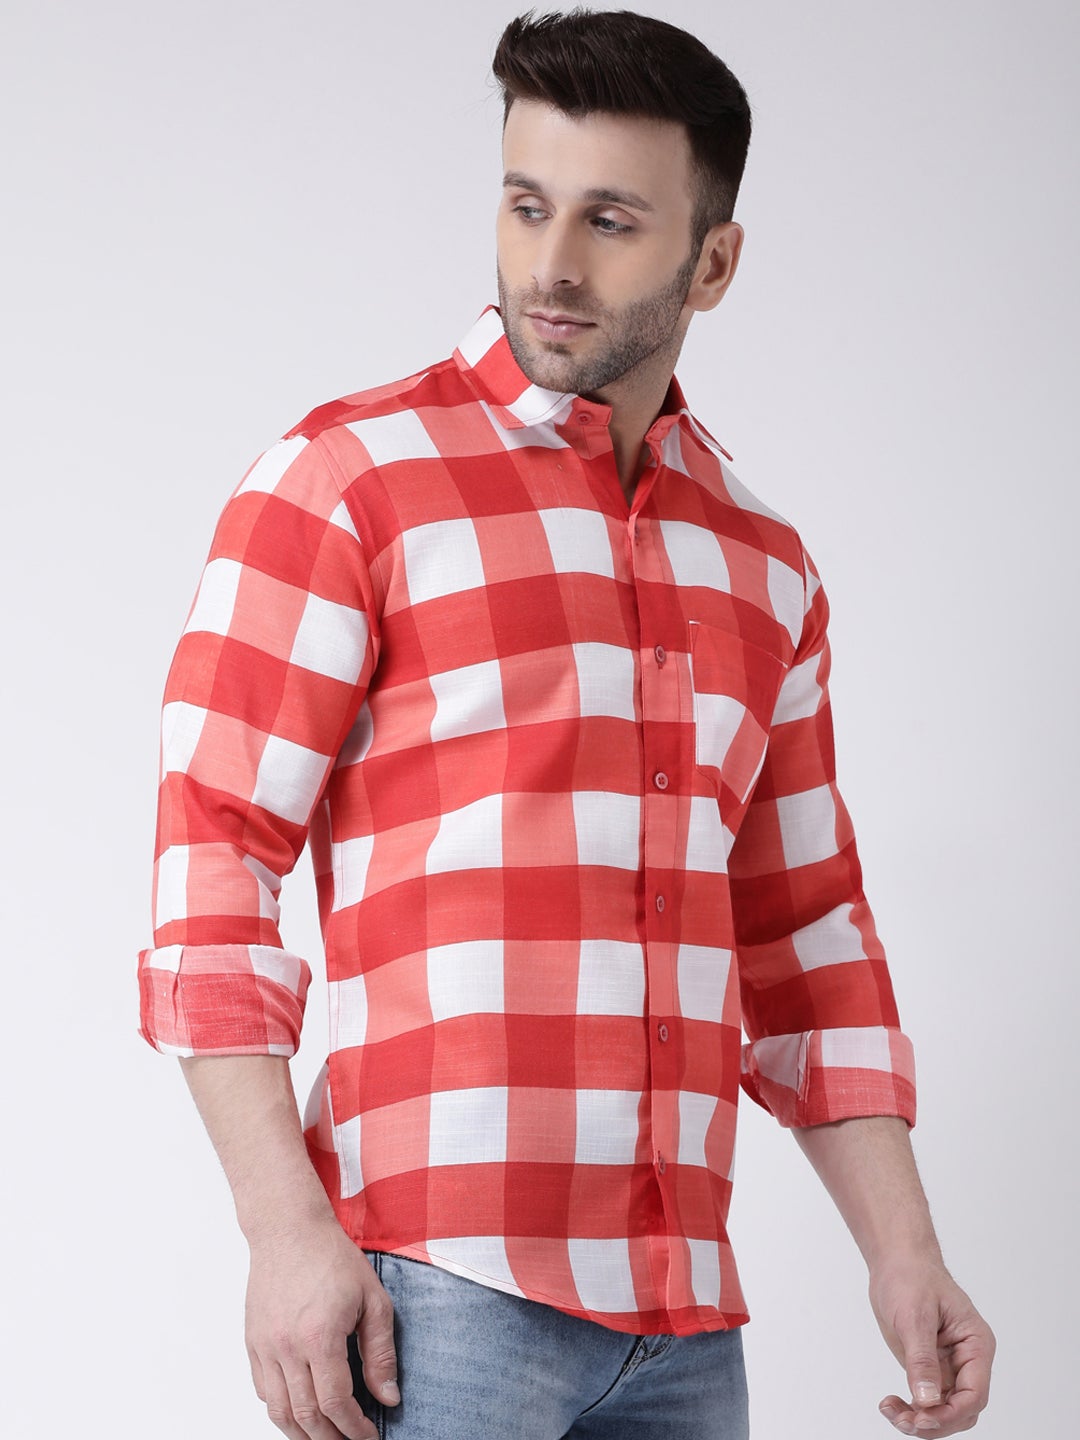 Men's Casual Checkered Shirt